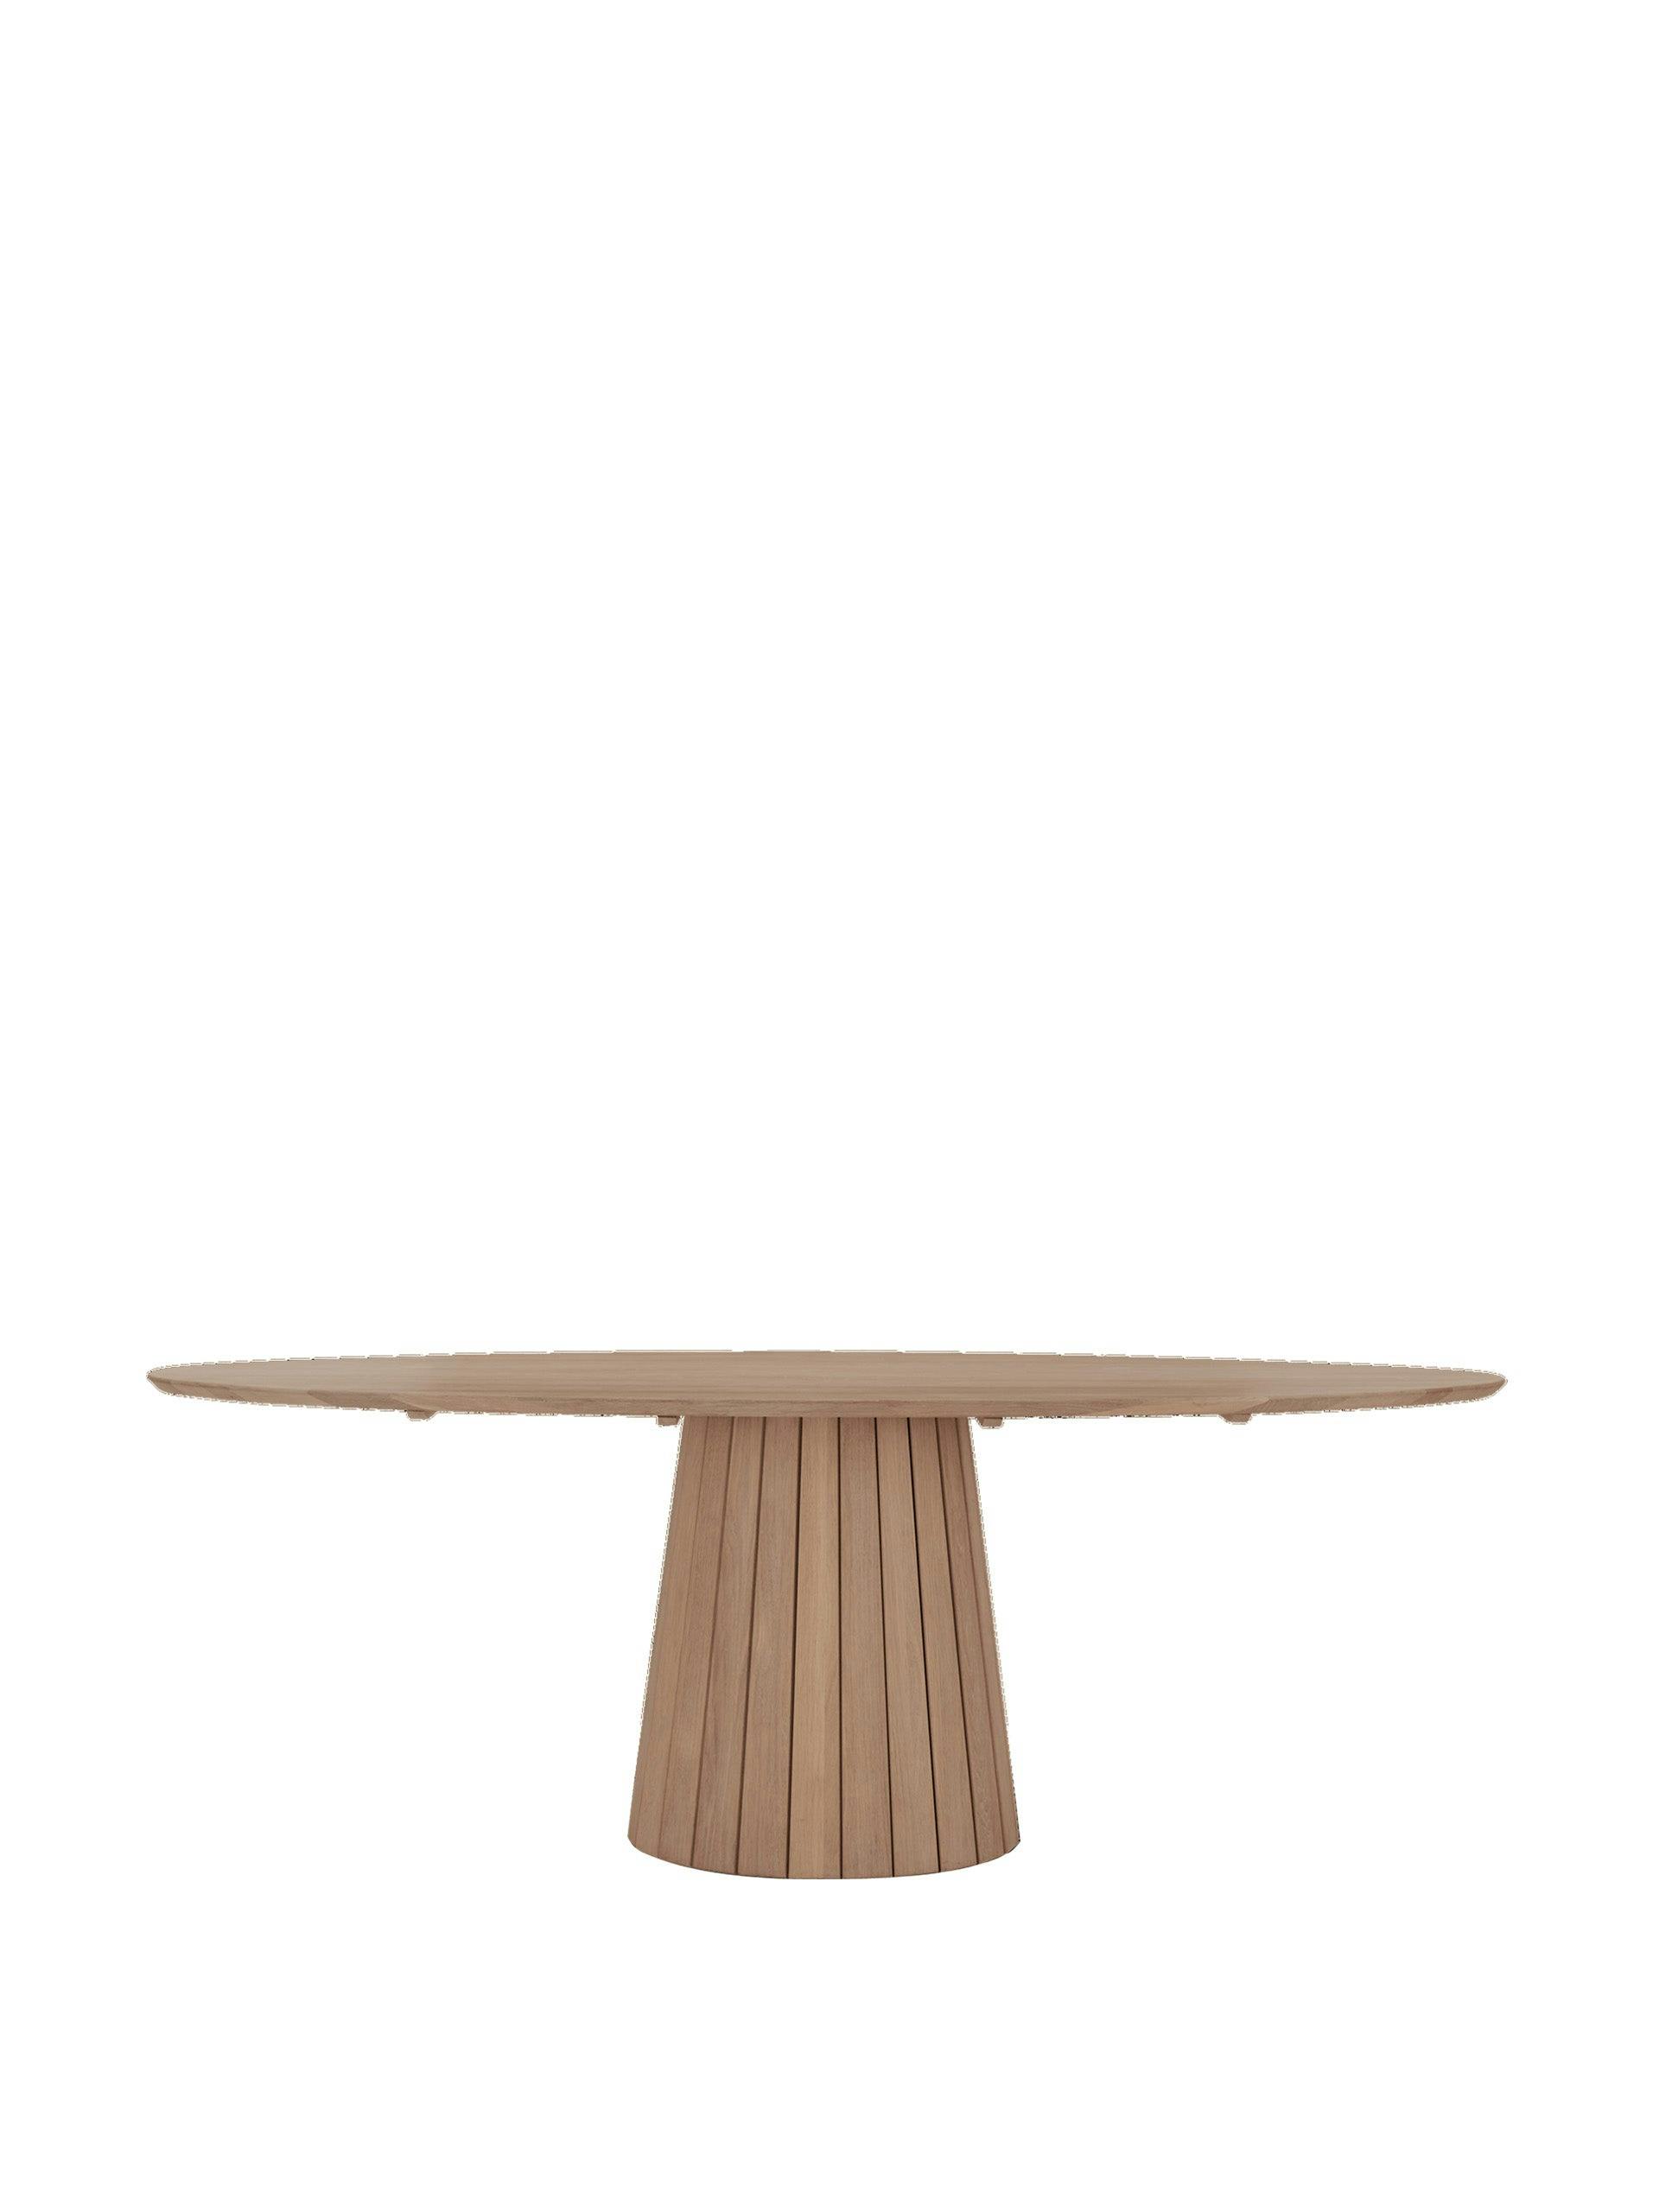 Stratford elliptical dining table